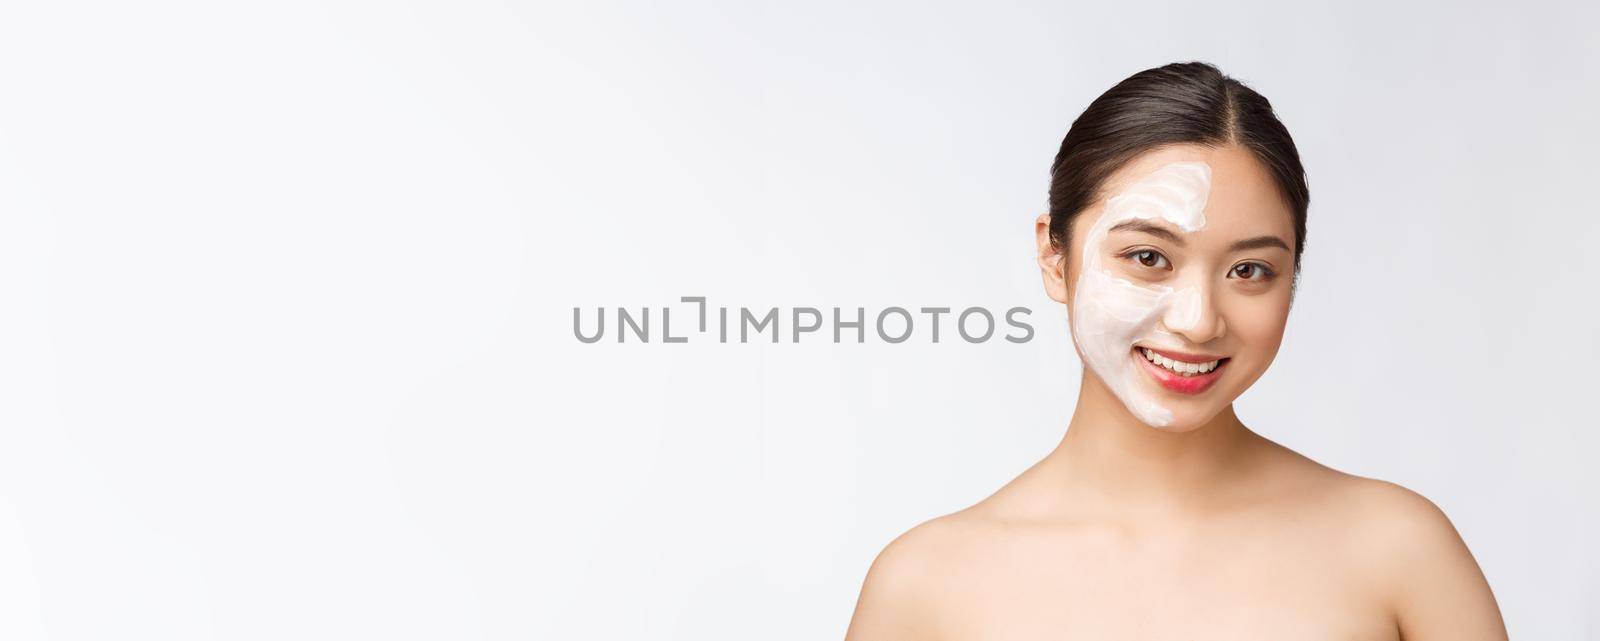 Charming pleasant woman applying cream on half face.